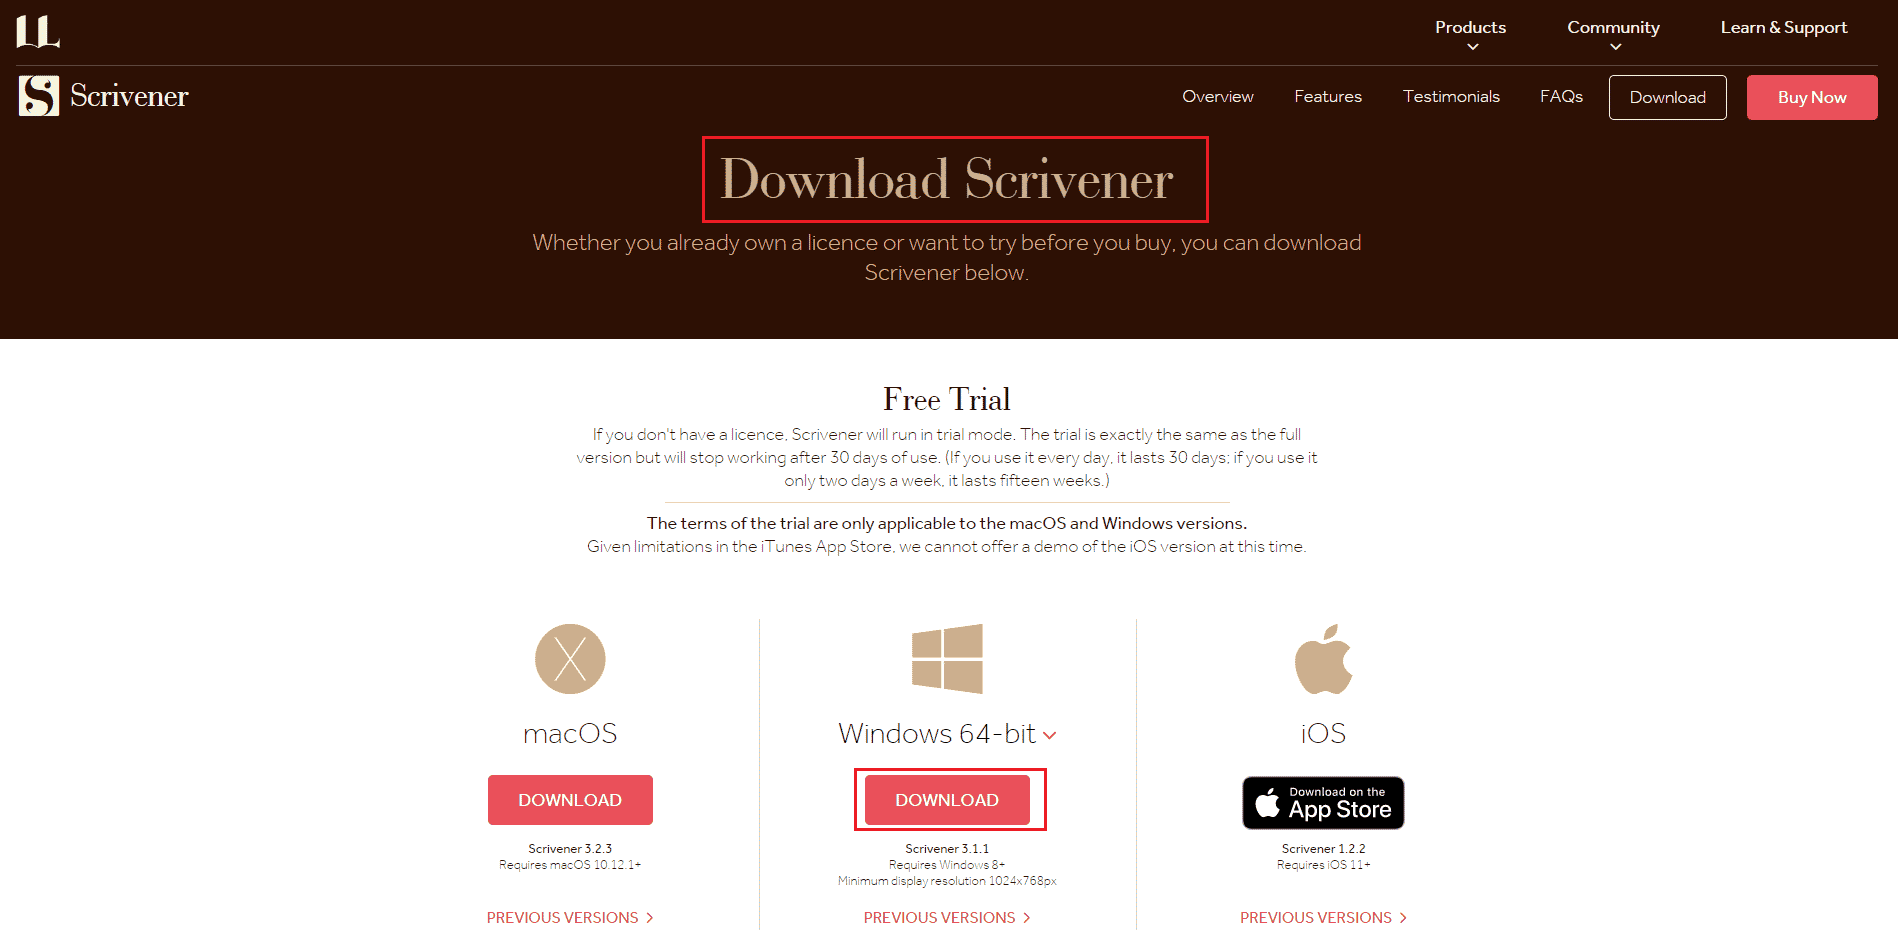 Scrivener download page